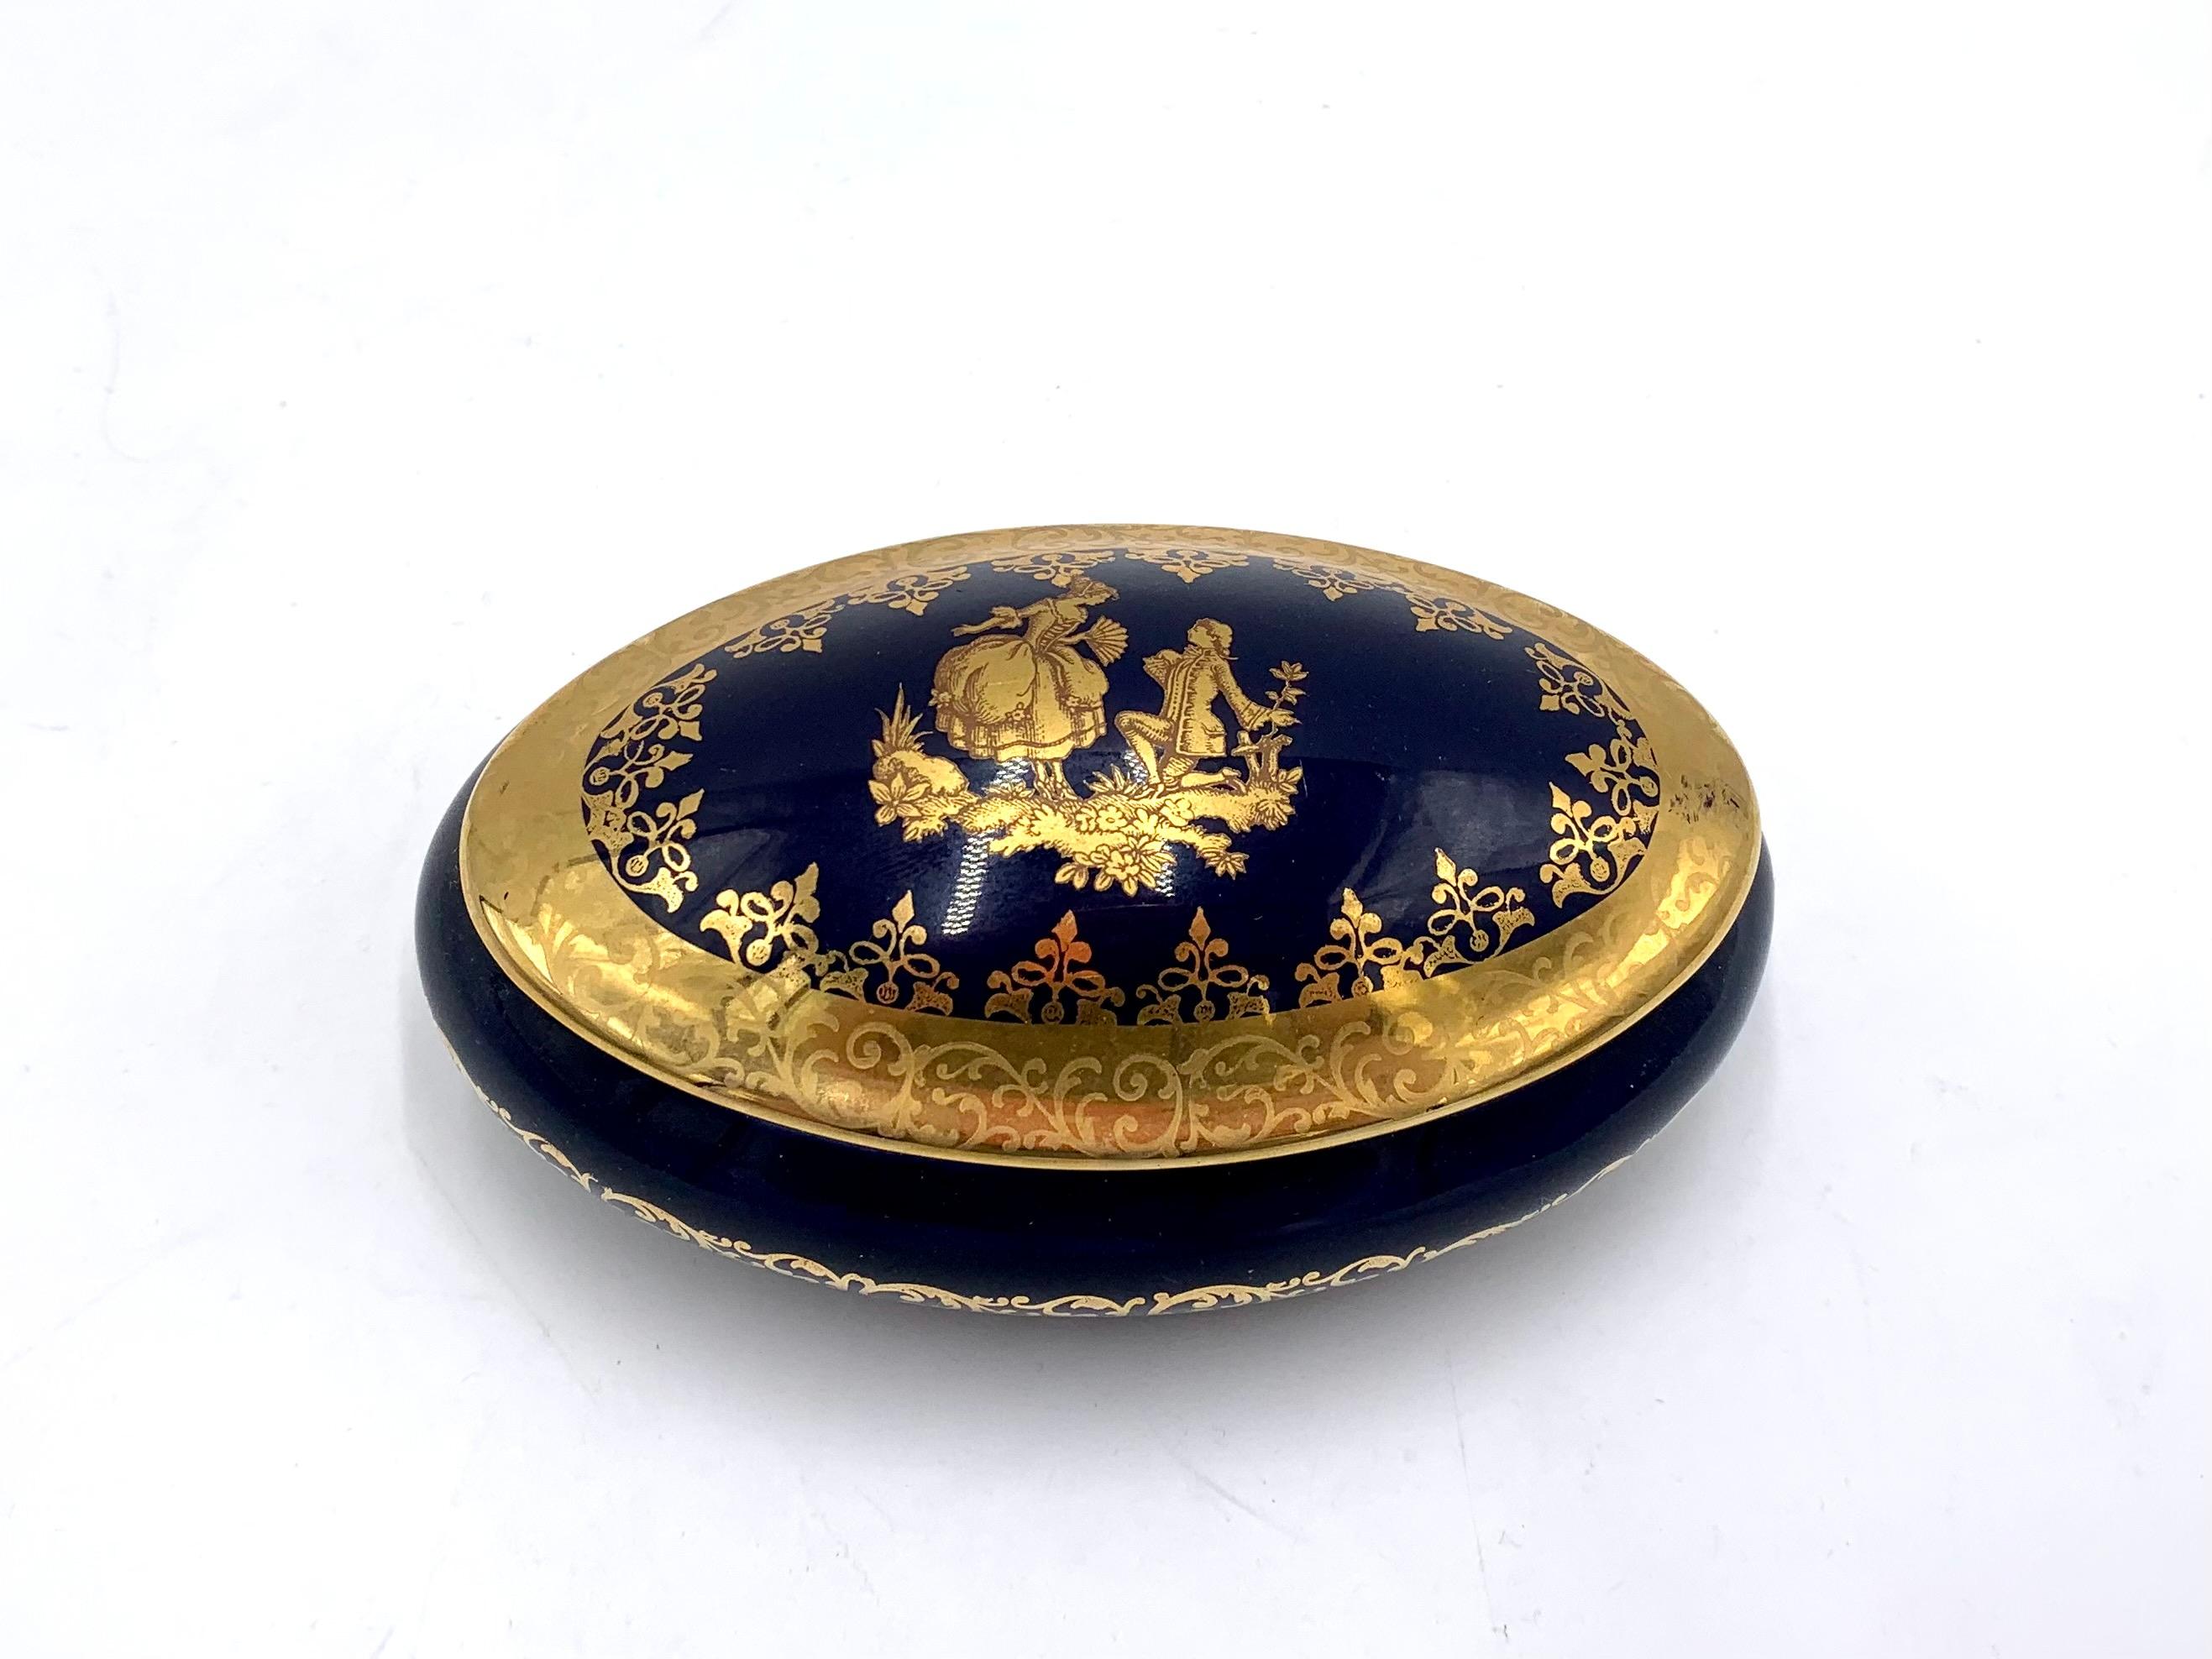 A cobalt porcelain box with a gilded genre scene

Very good condition, no damage.

Casket signed F.M. Limoges France

Measures: height 5 cm, width 12.5 cm, depth 8 cm.